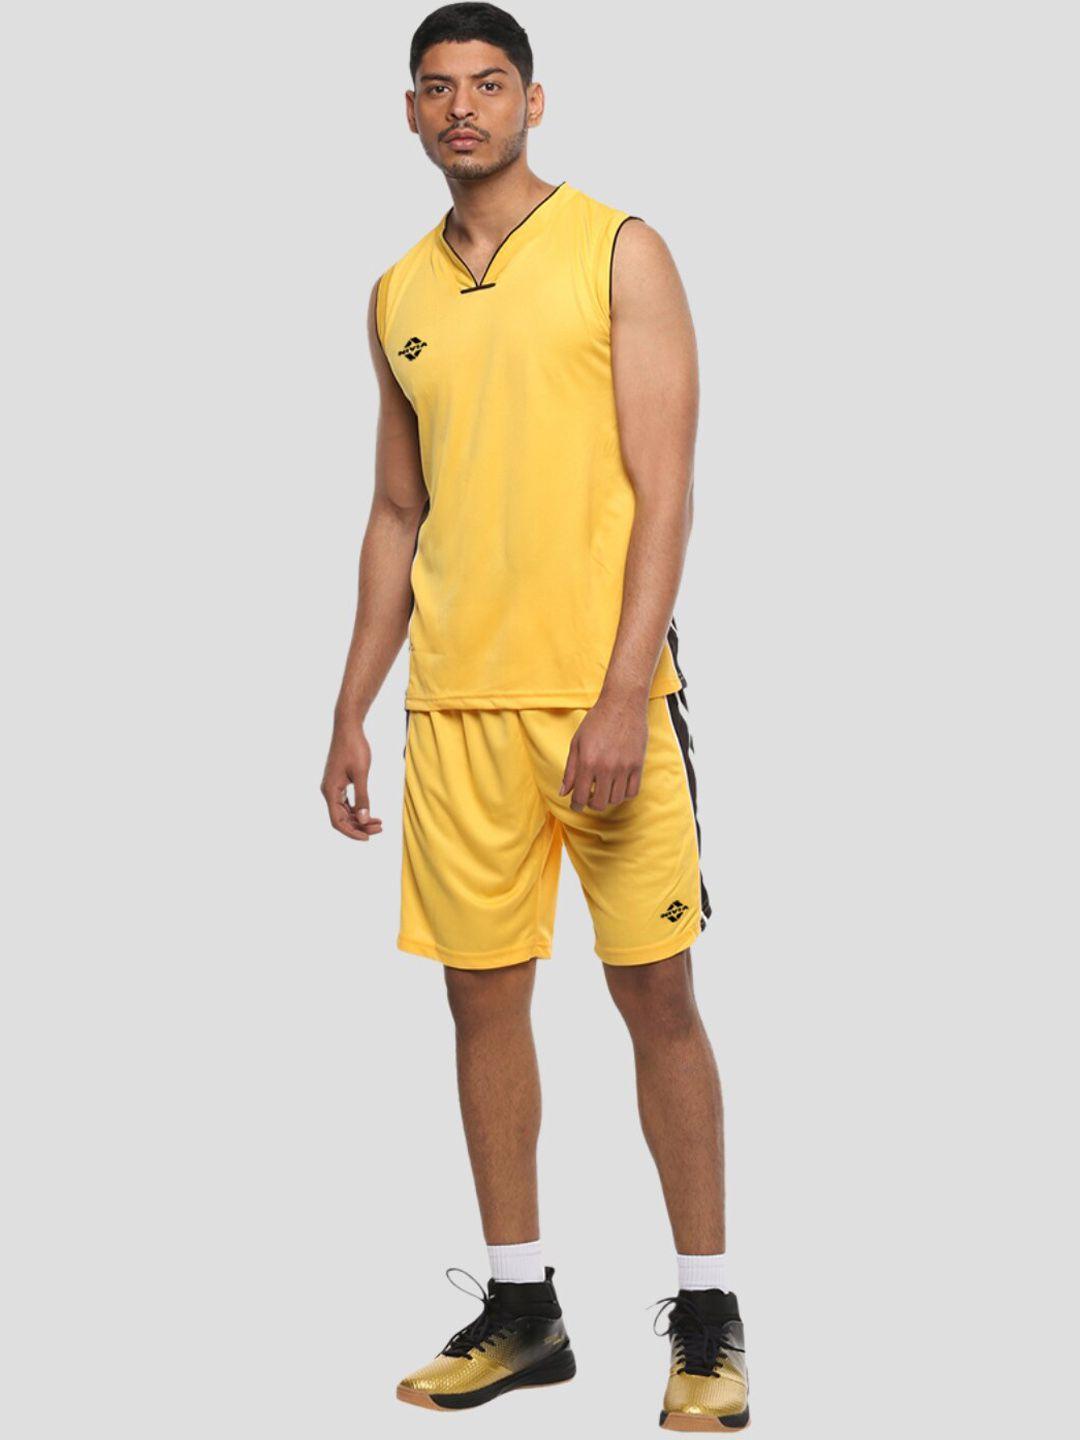 nivia panther sleeveless basketball jersey set